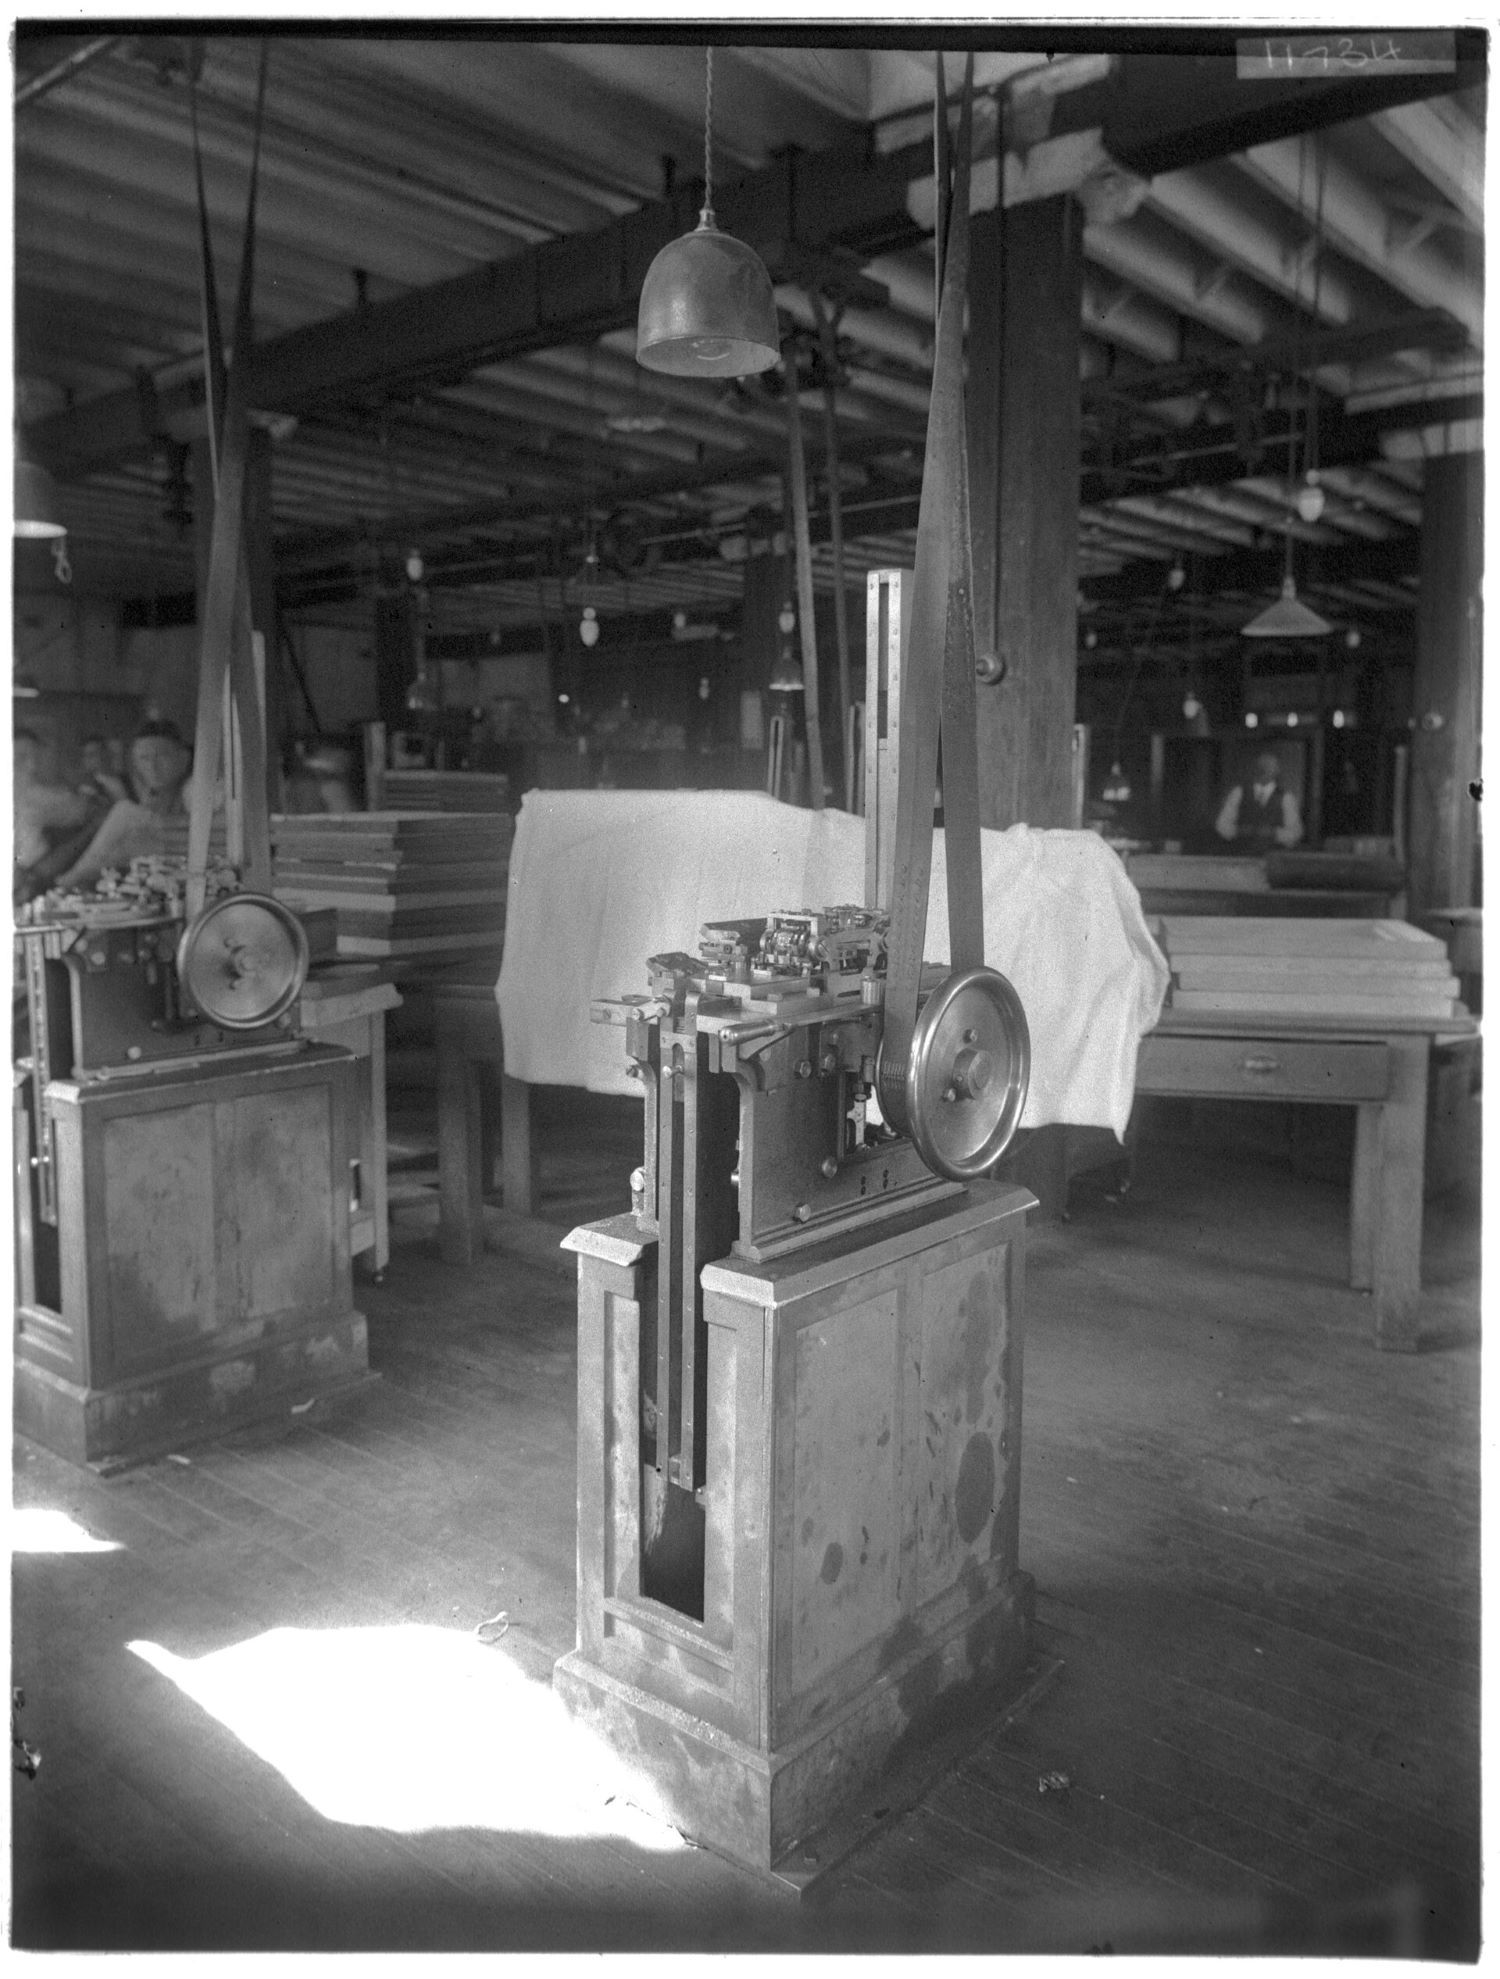 Machinery in a workshop